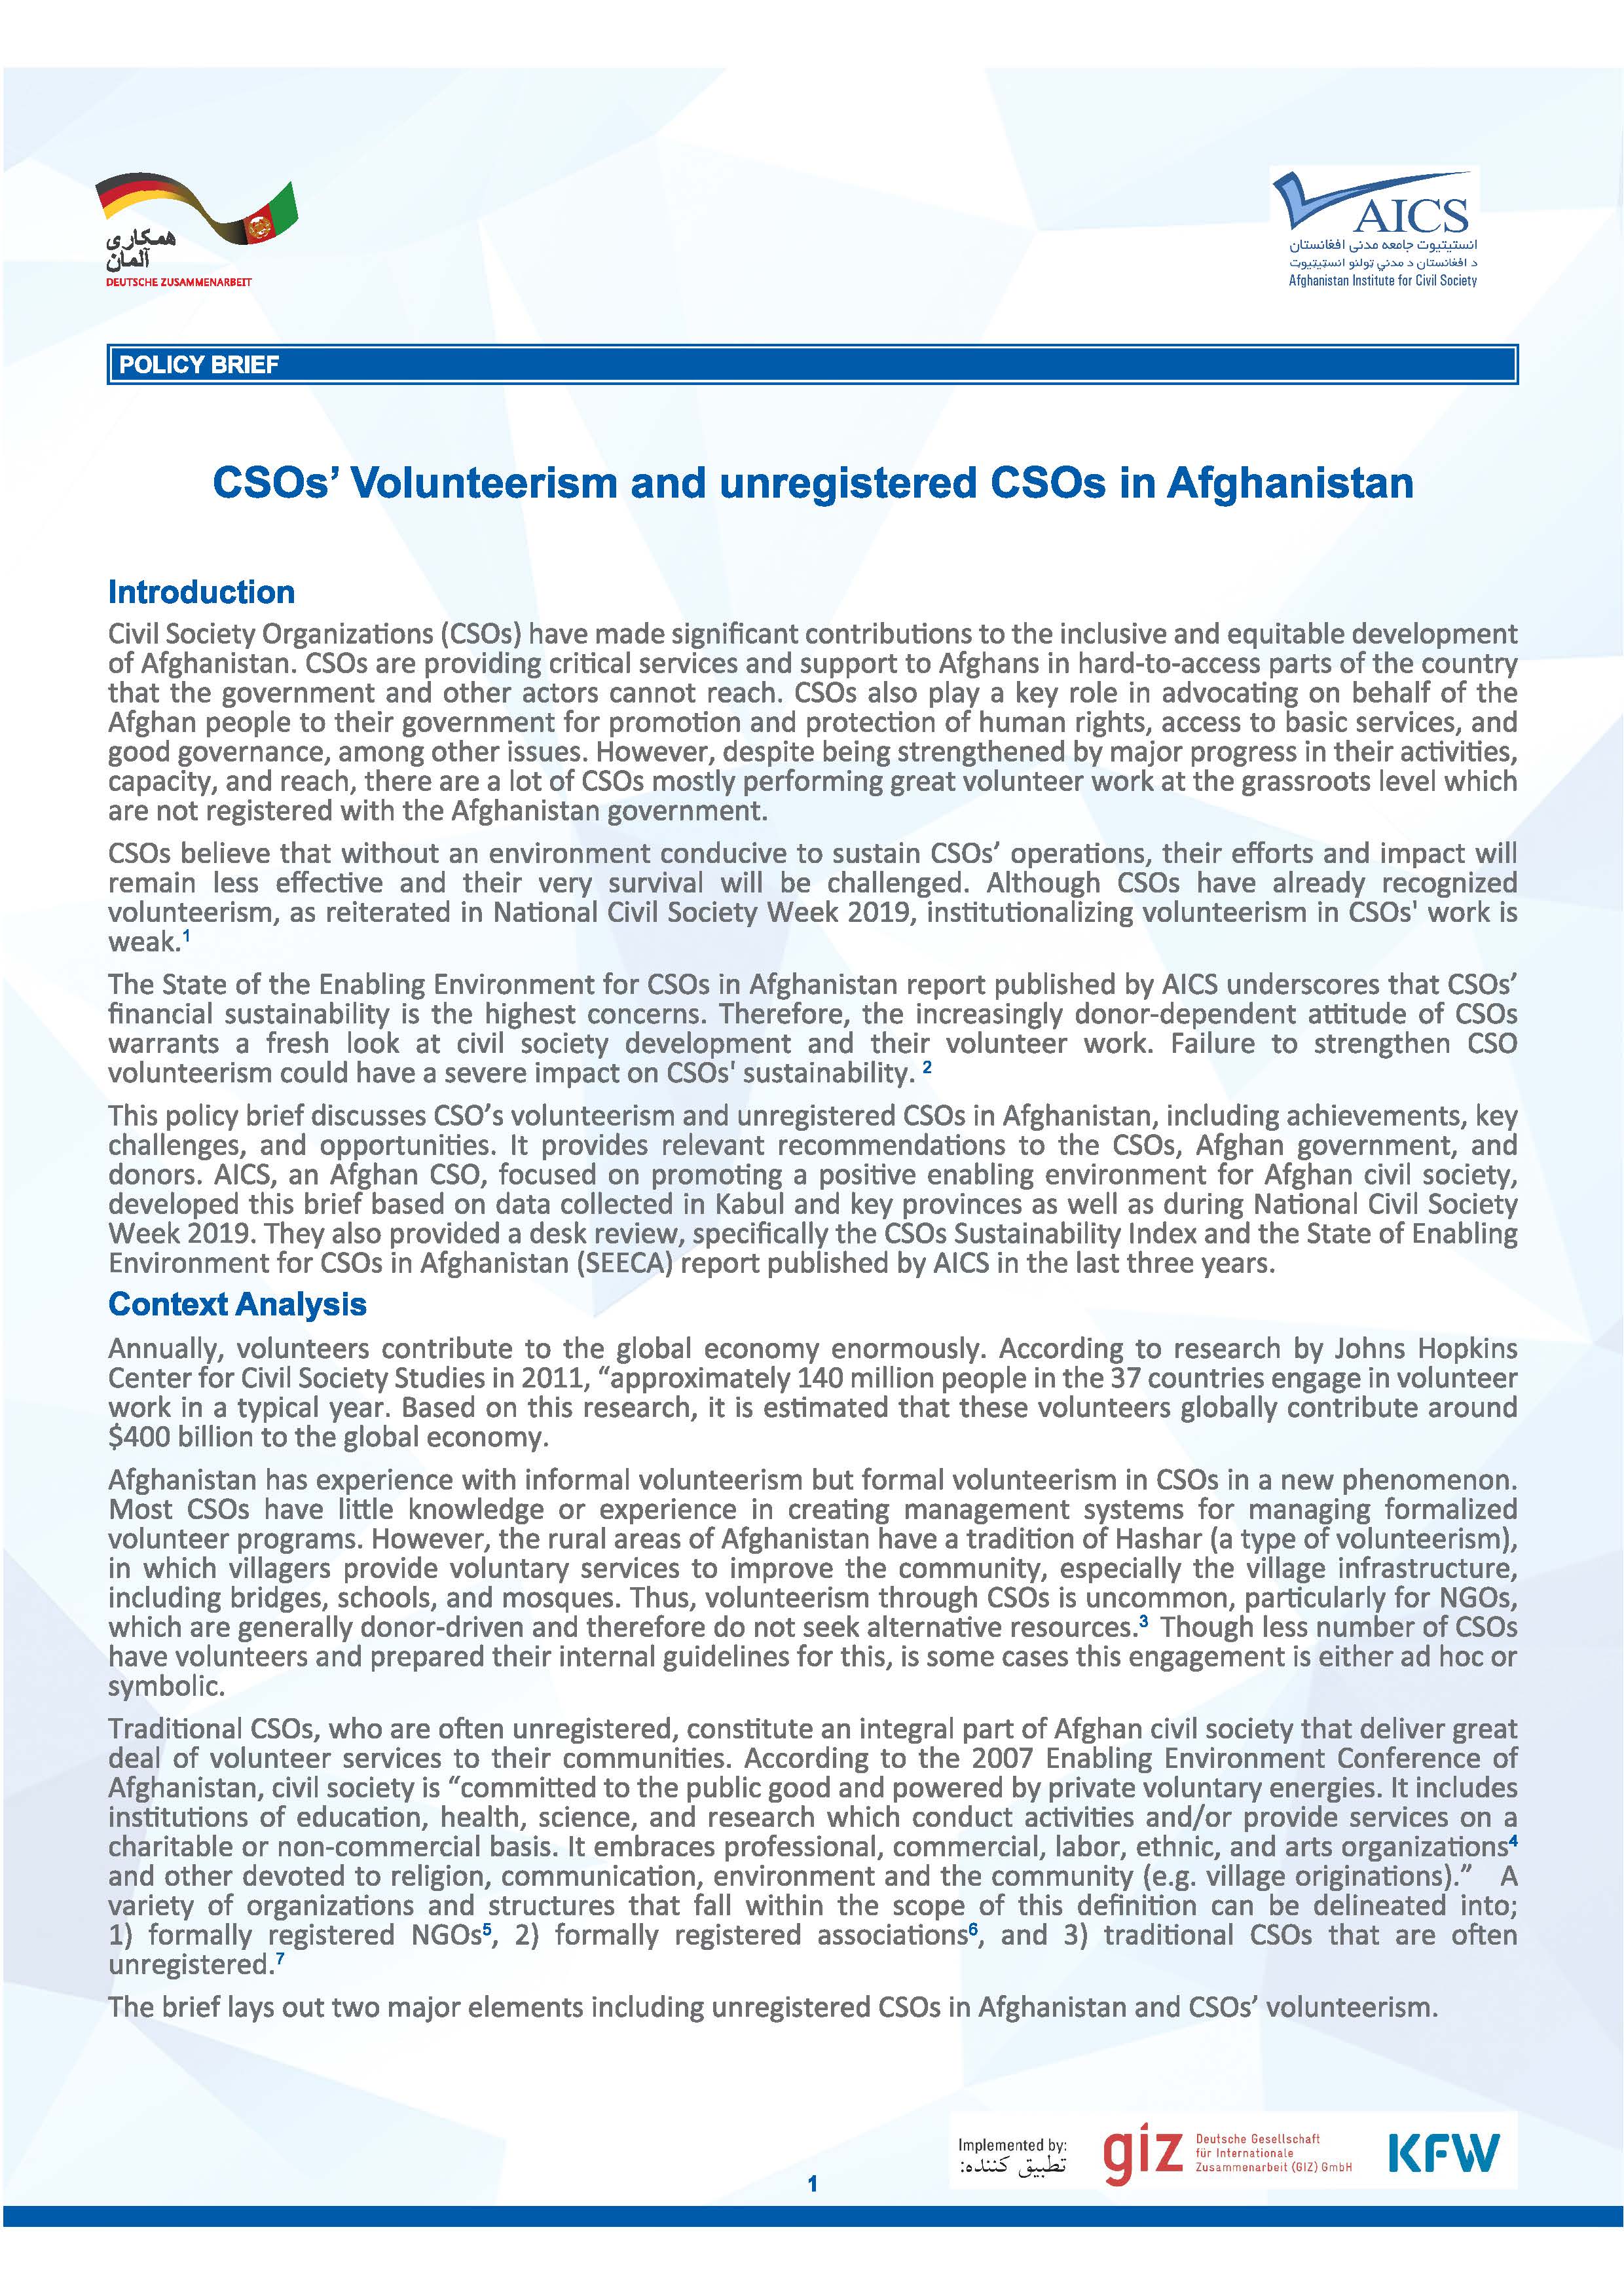 Policy Brief on CSOs’ Volunteerism and unregistered CSOs in Afghanistan